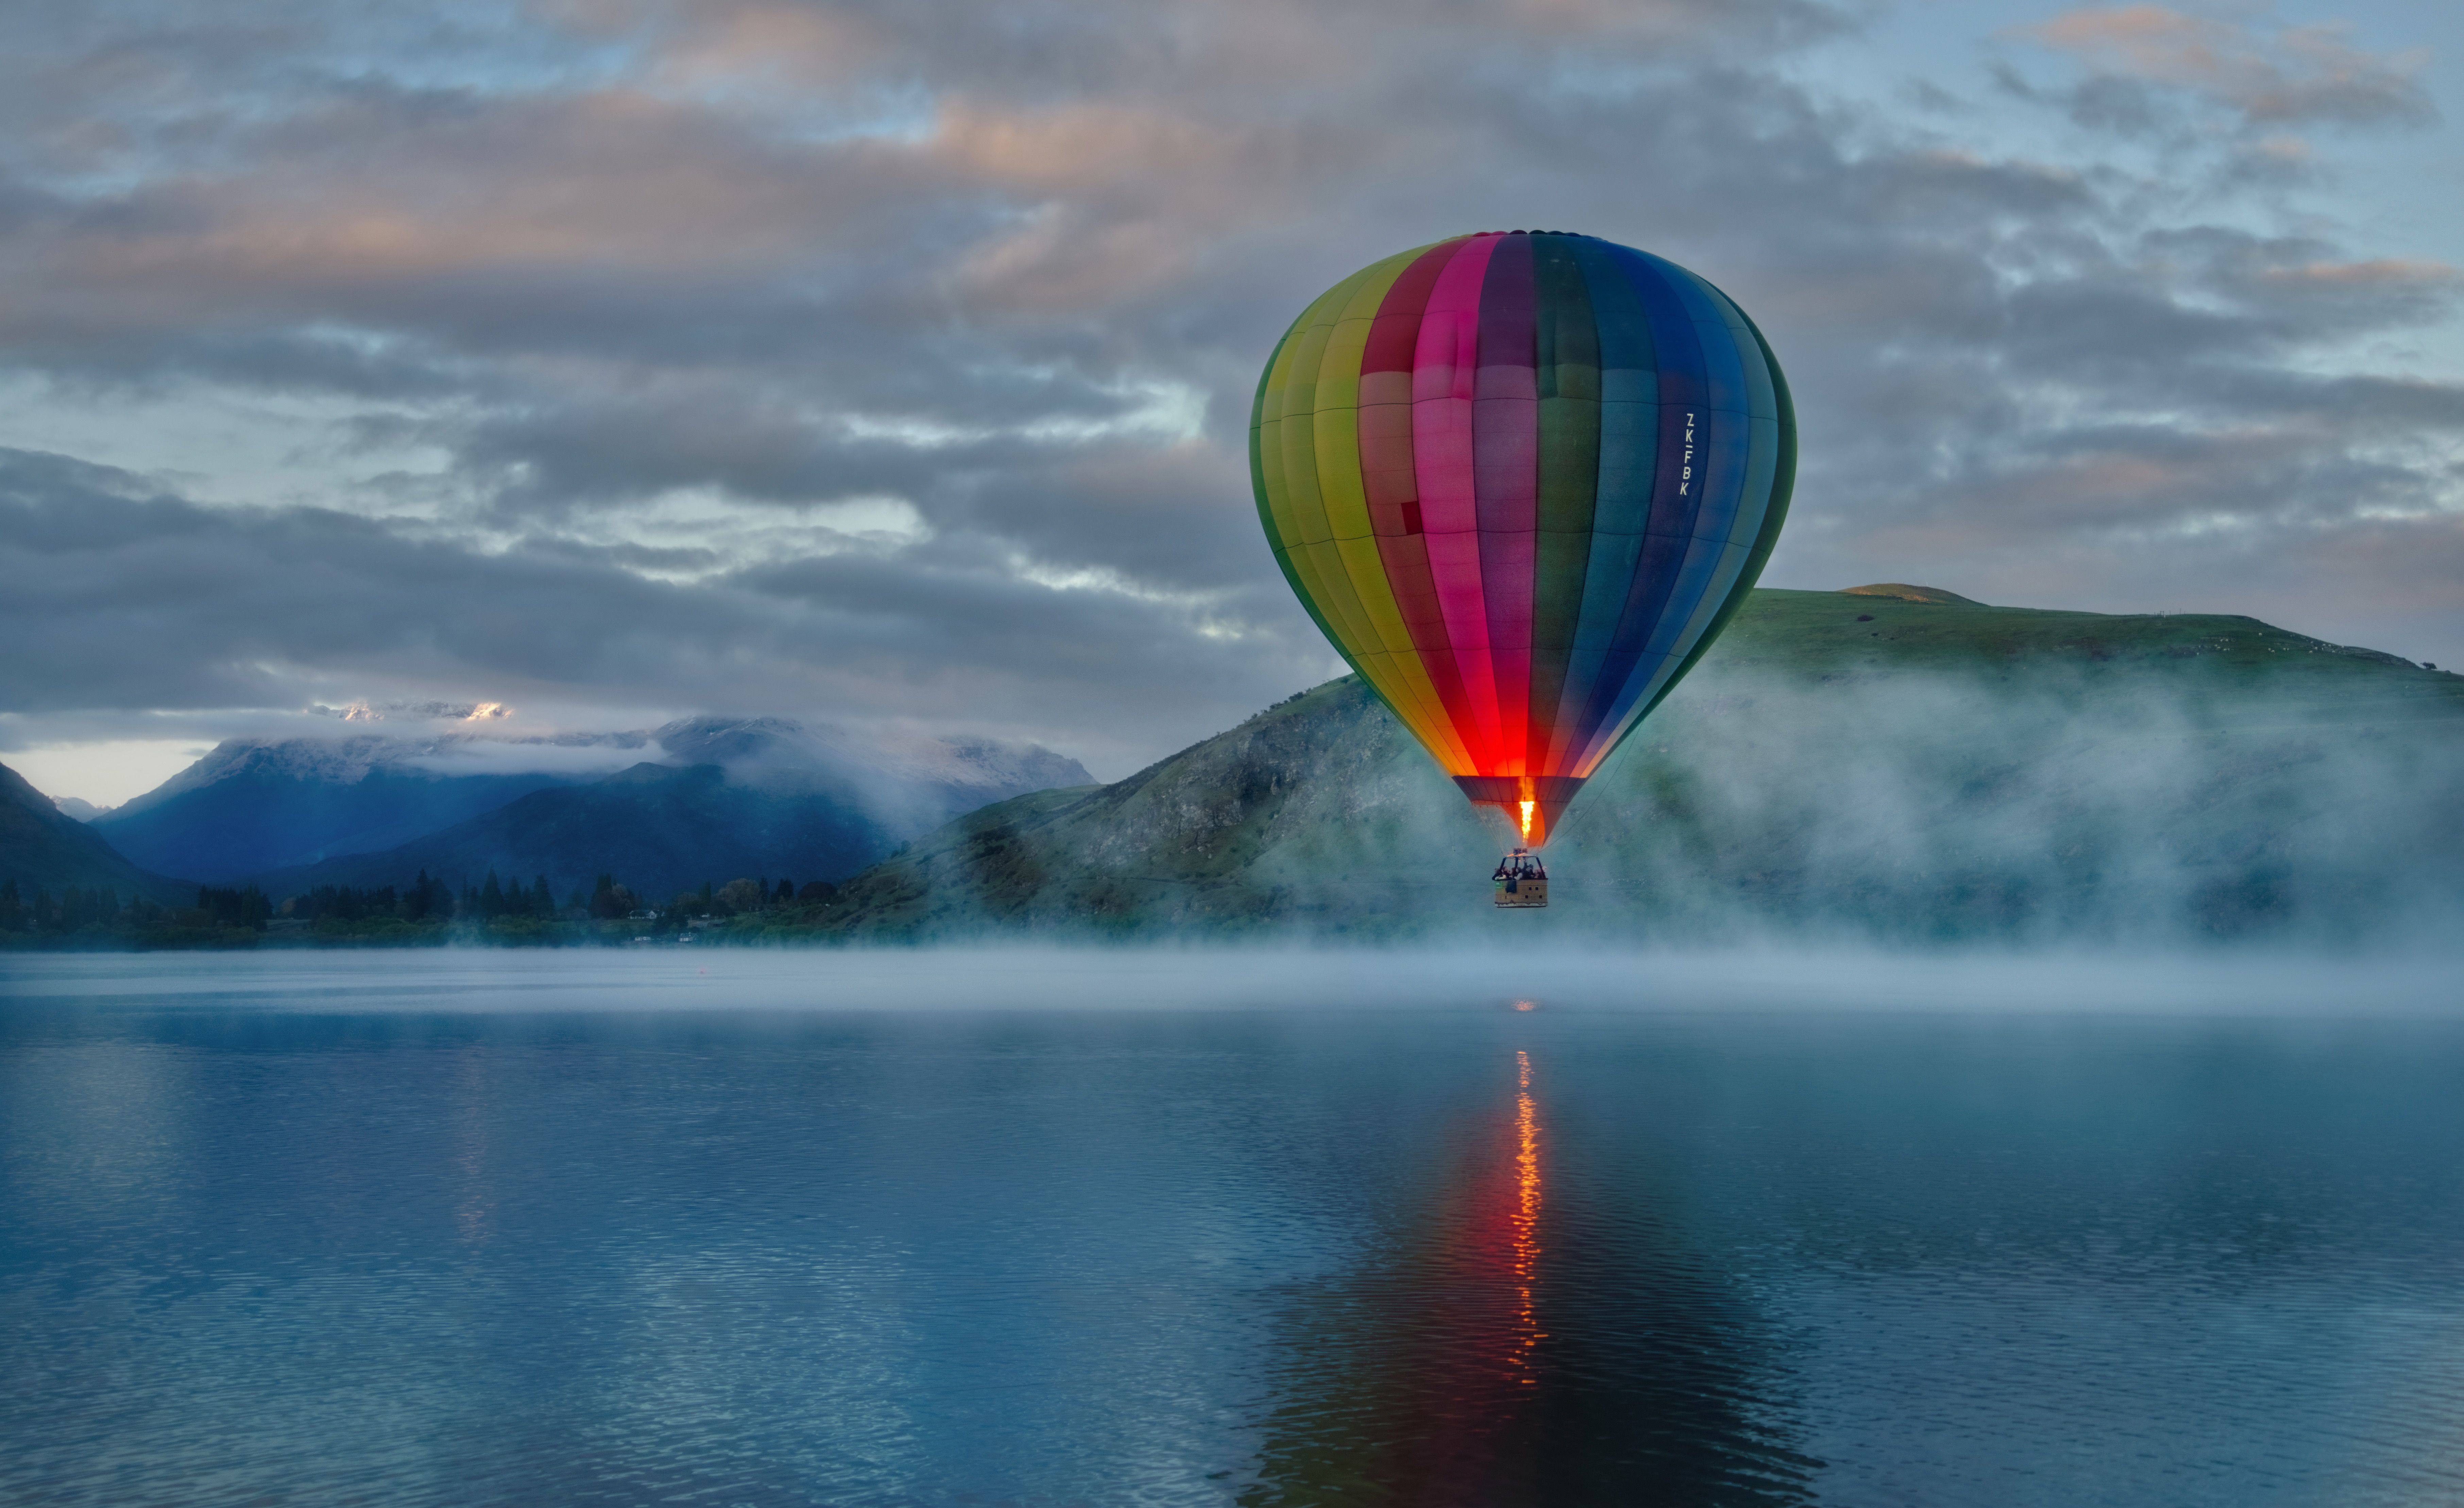 Hot Air Balloon 8k, HD Nature, 4k Wallpaper, Image, Background